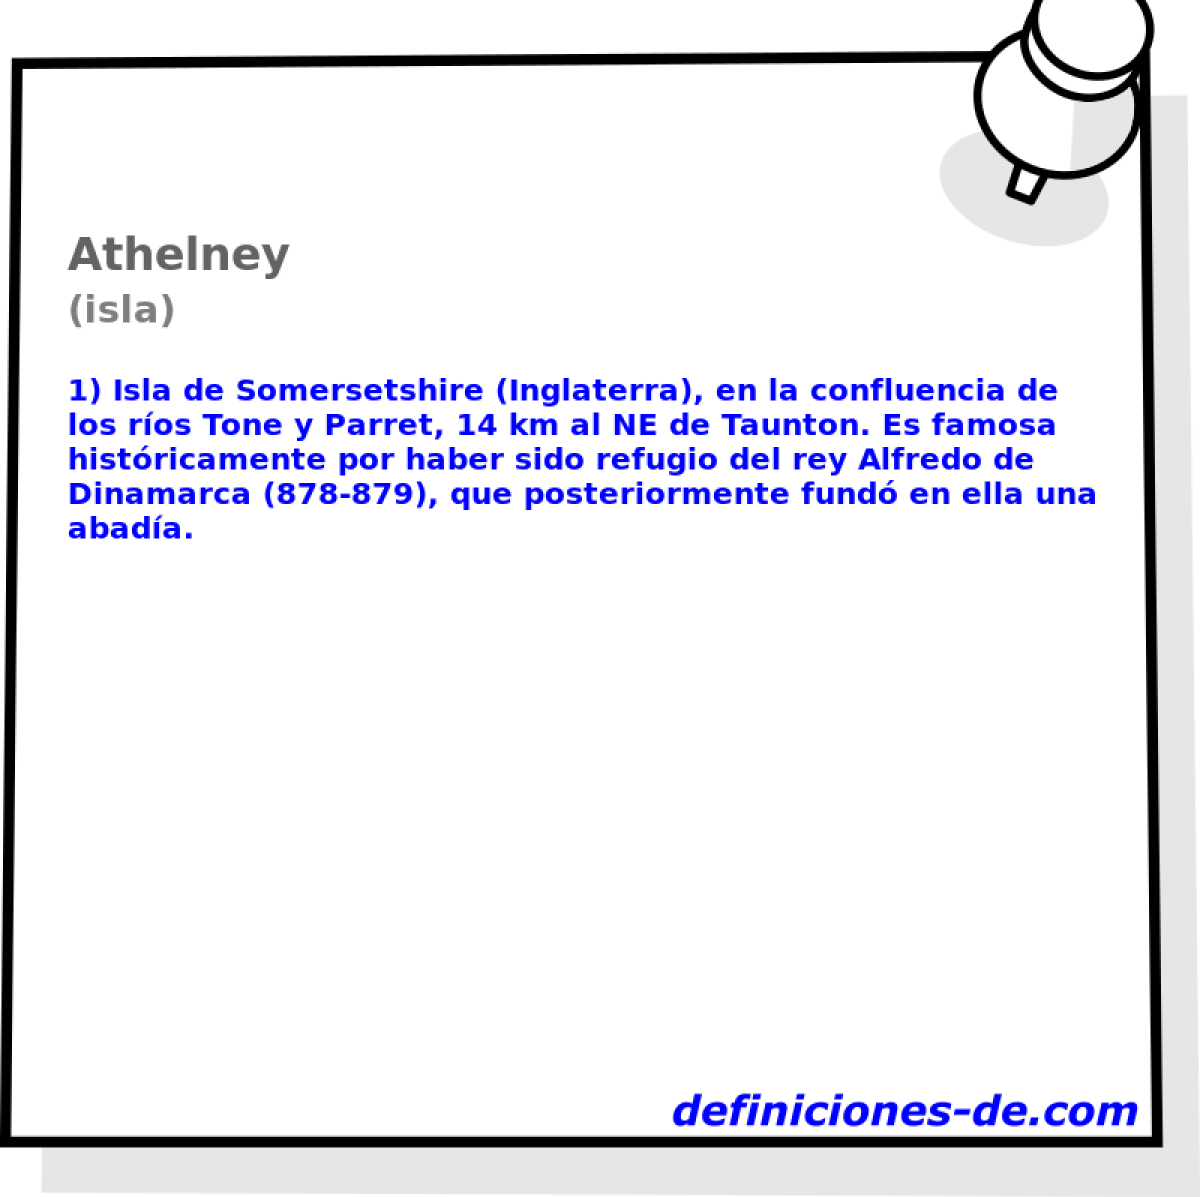 Athelney (isla)